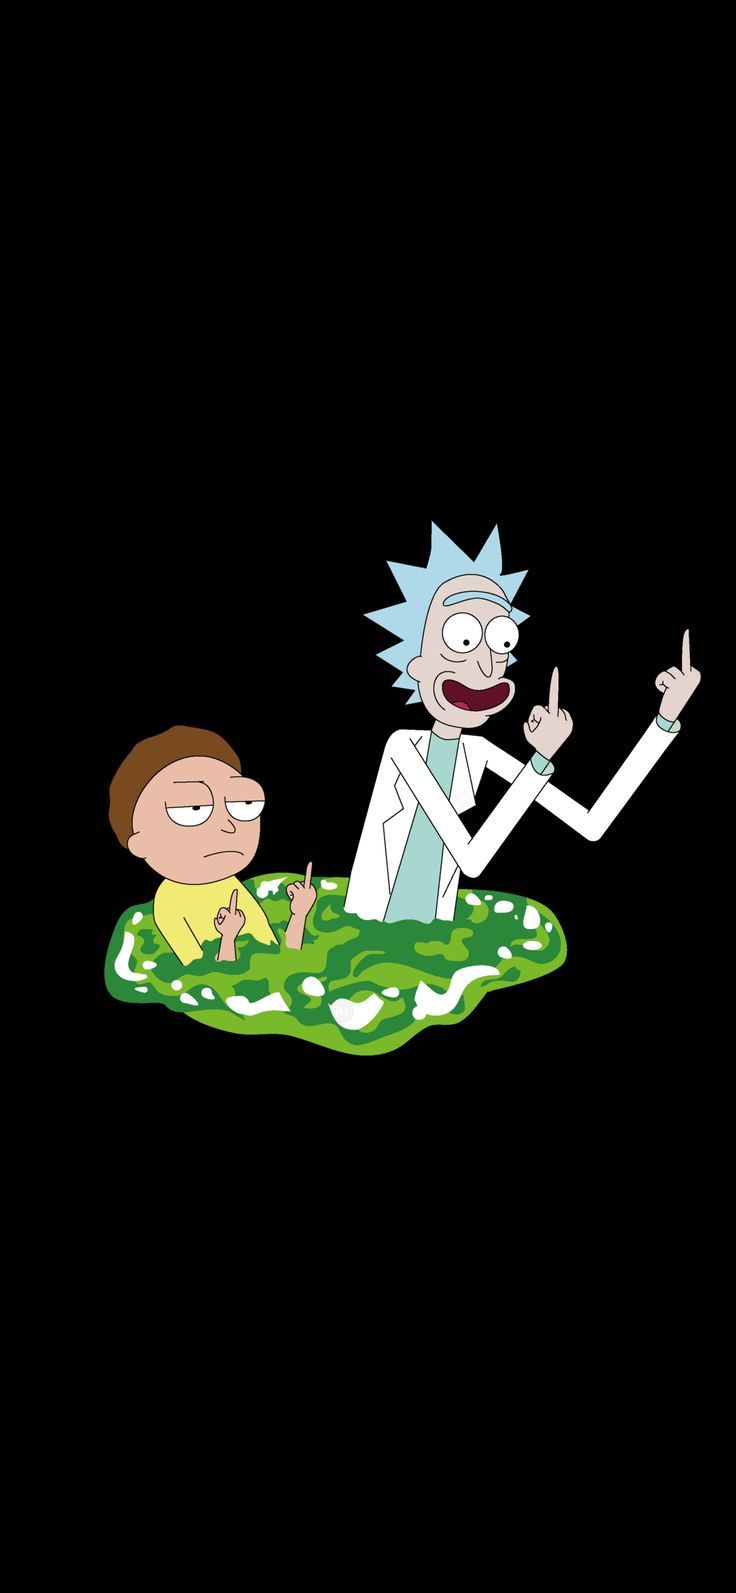 Rick and Morty on a portal - Rick and Morty